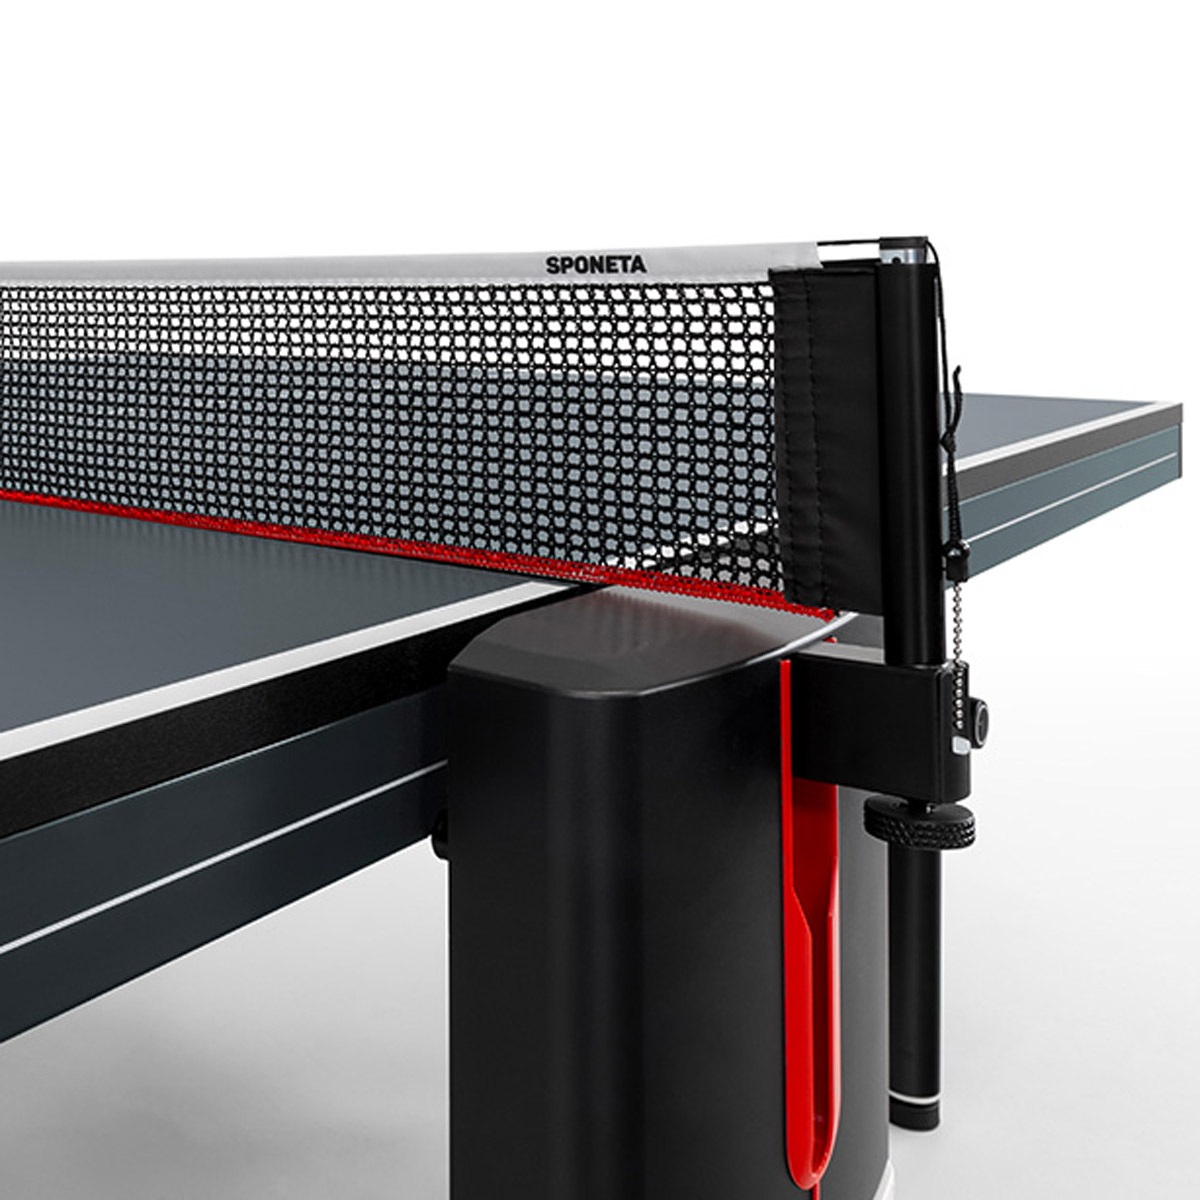 Sponeta Table SDL Pro Outdoor grey